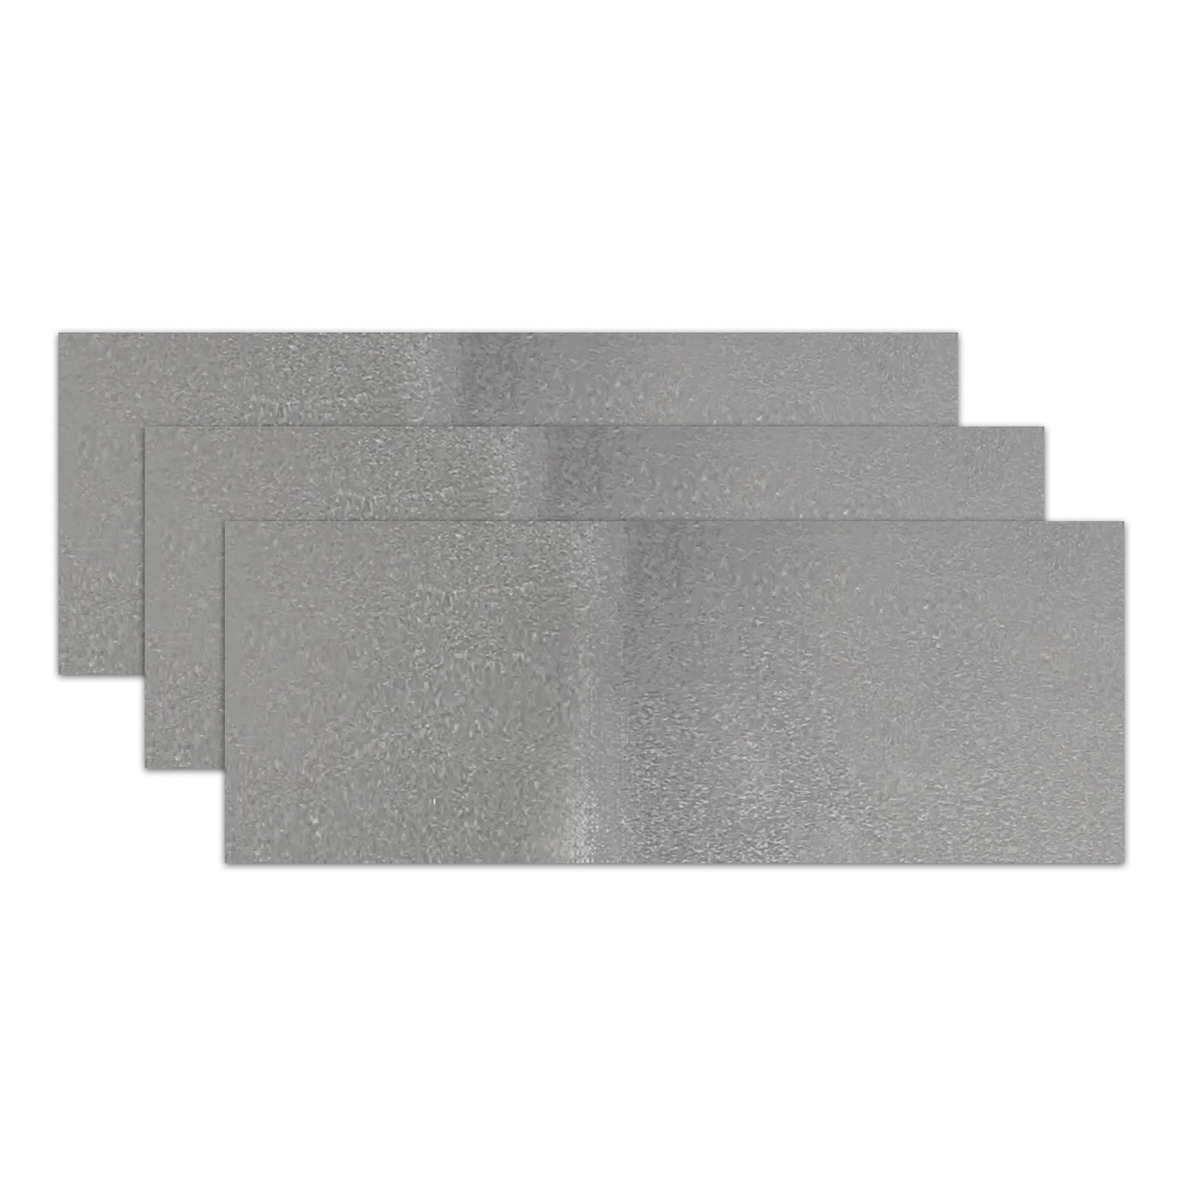 Design Engineering 10740 Oil Filter Heat Shield, 3-1/2 x 4-1/2 x 4 in, Aluminized Fiberglass Fabric, Silver, Set of 3